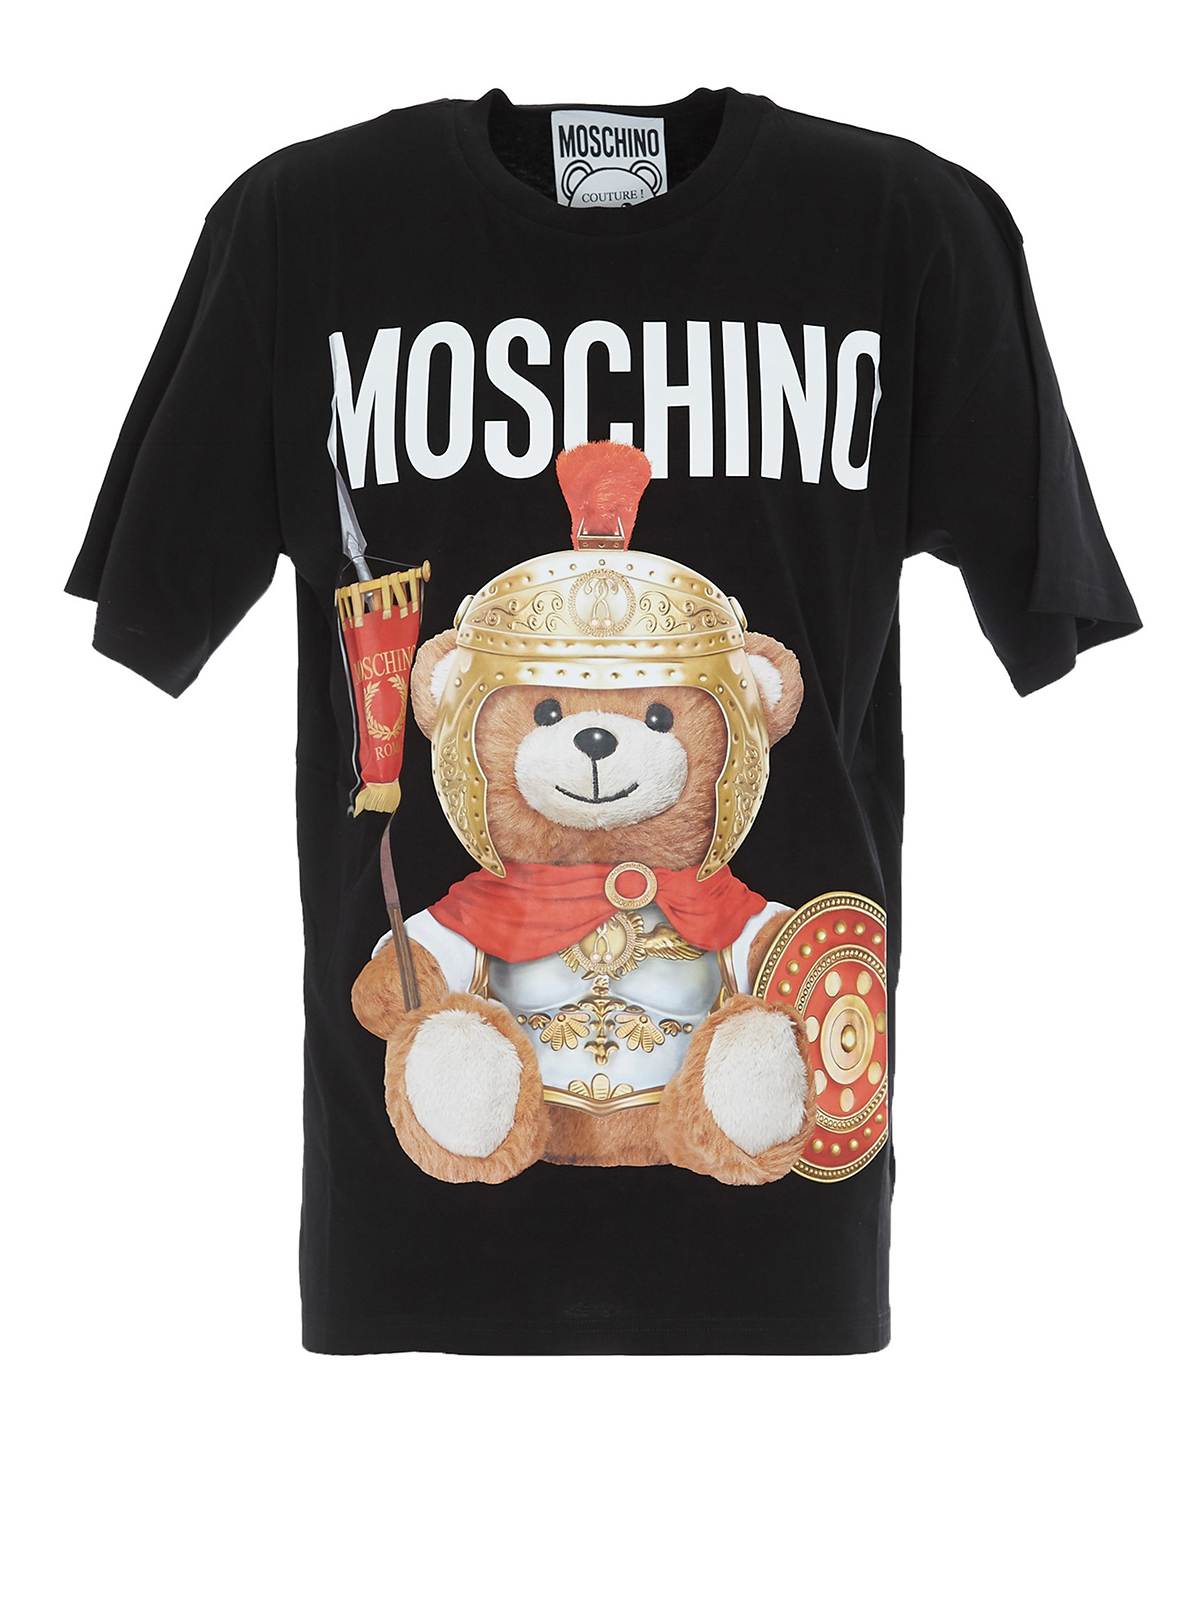 moschino t shirt men's teddy bear